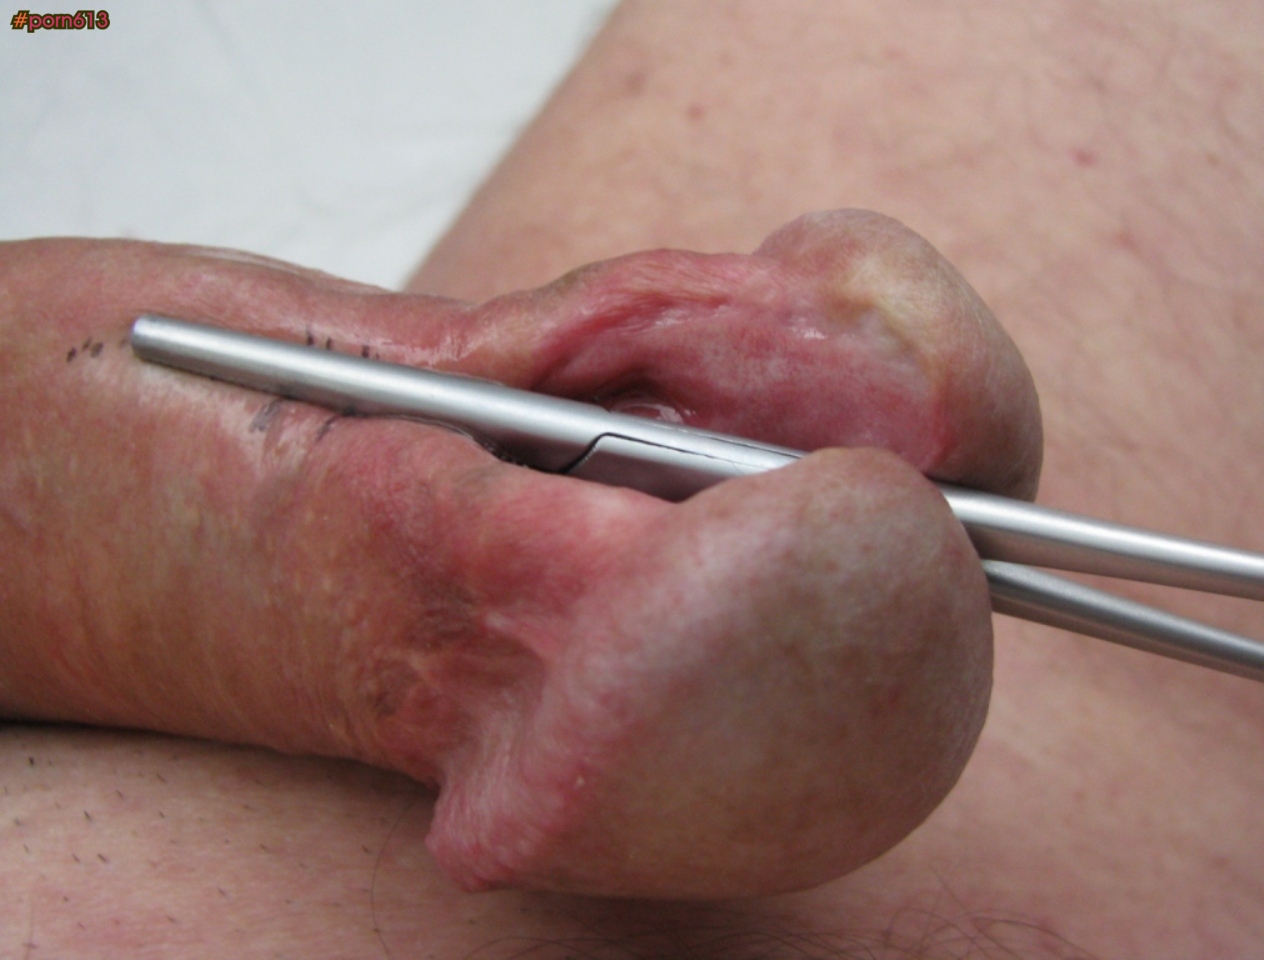 Porn613 Adult Image Gallery Penile Mutilation